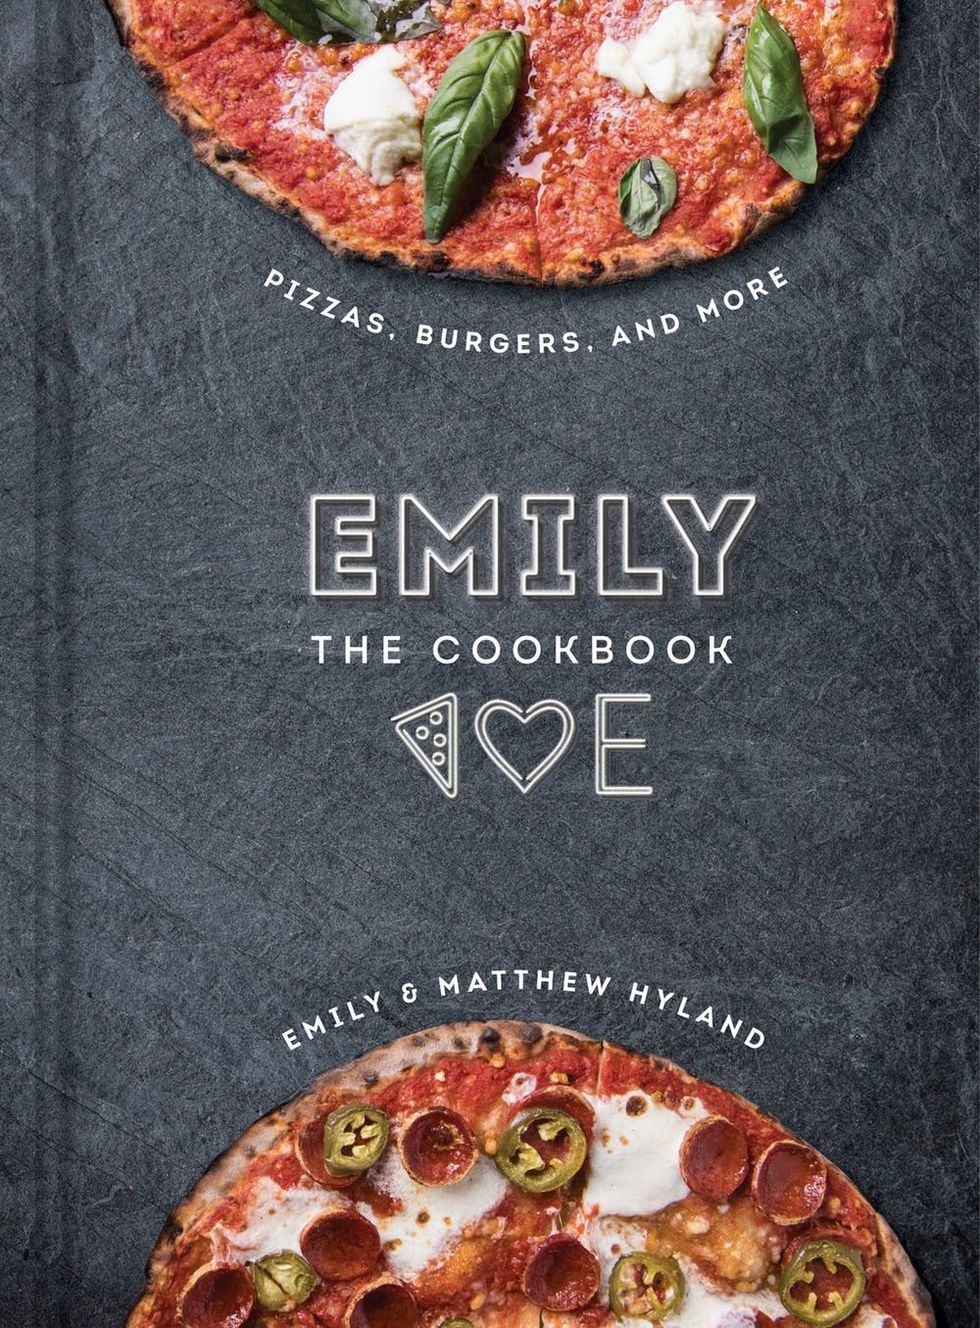 Emily the cookbook